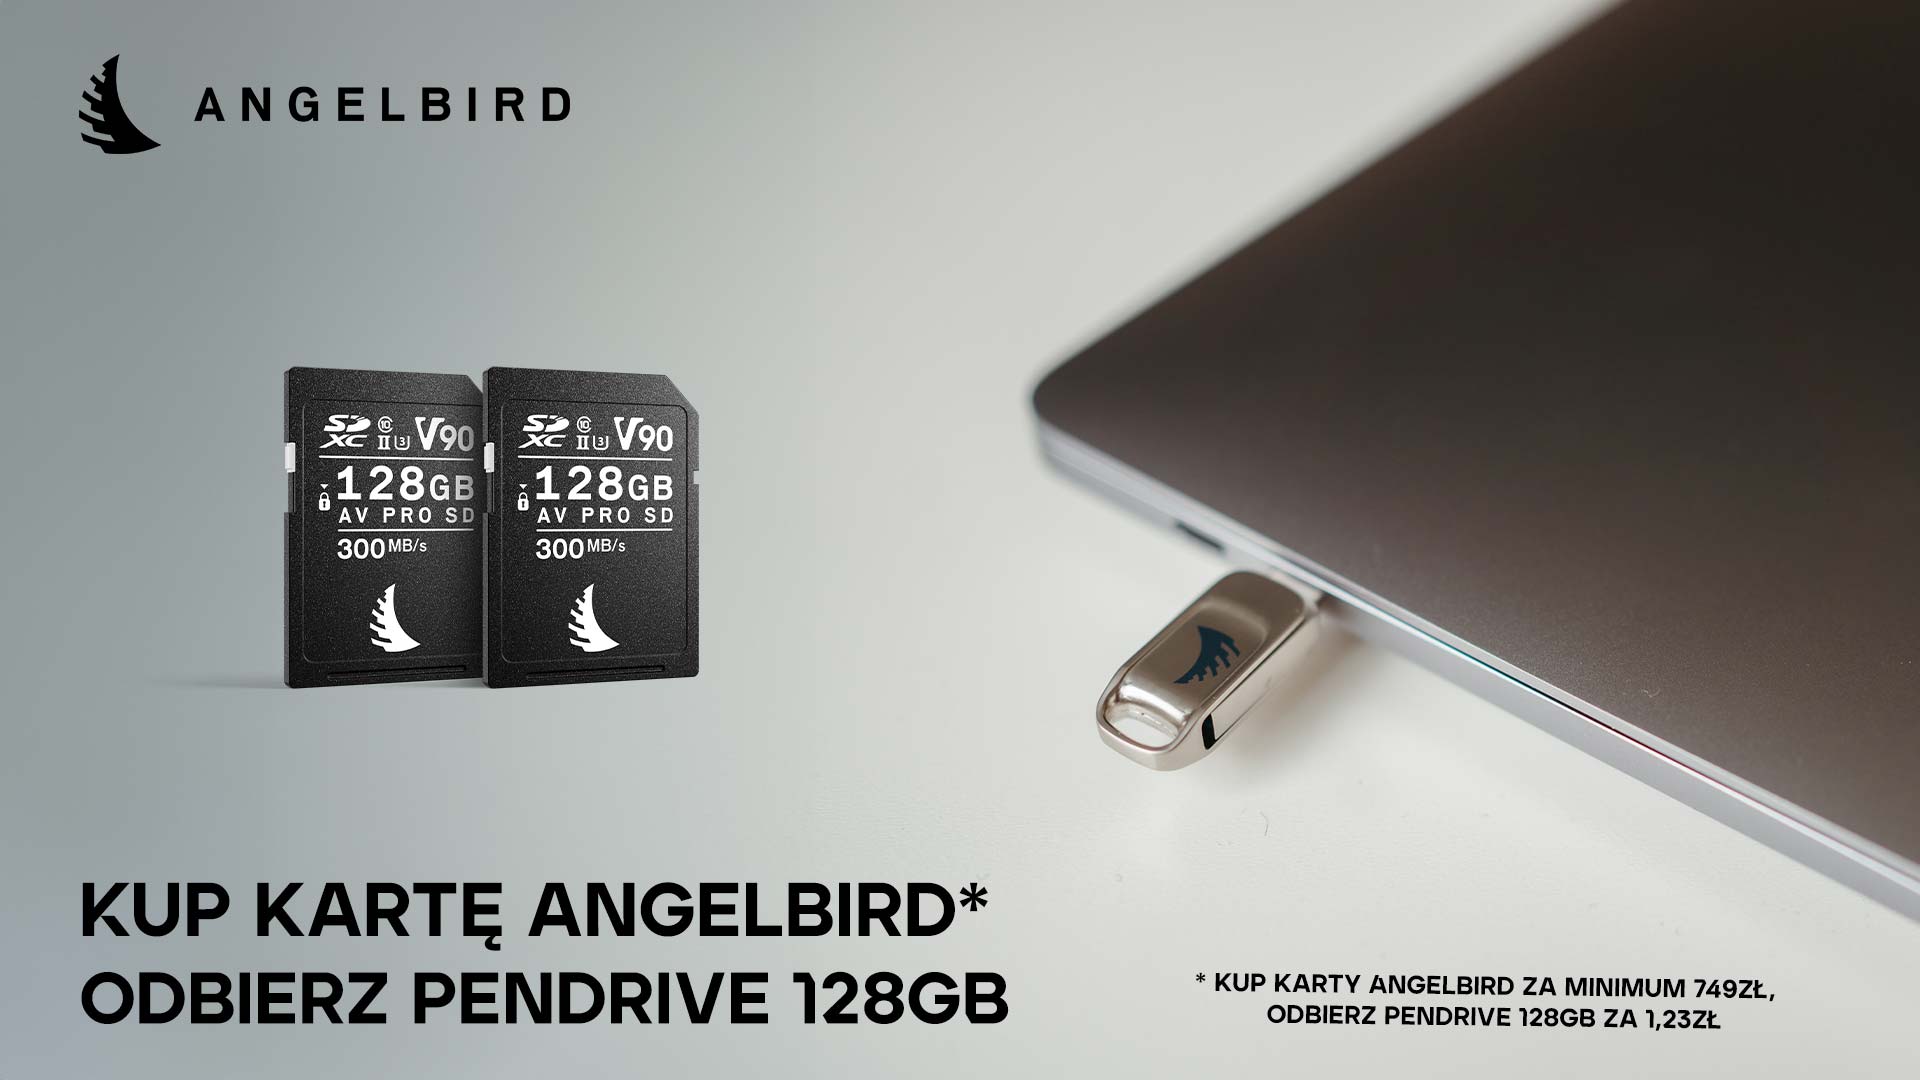 Promocja AngelBird